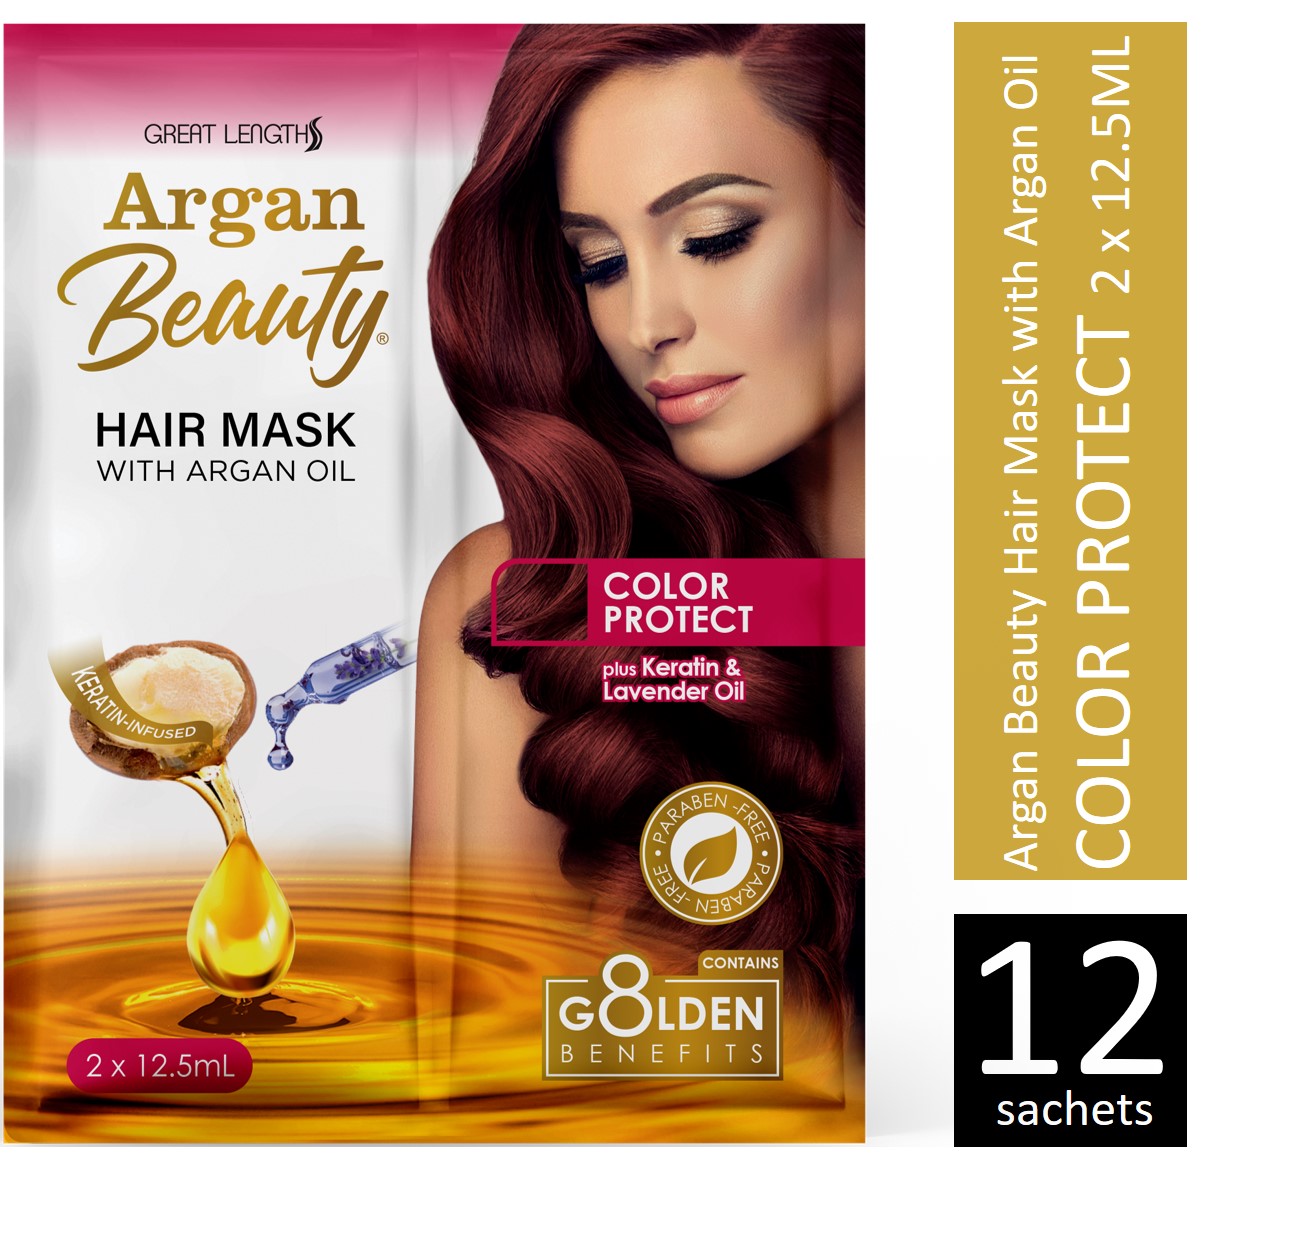 Argan Beauty HAIR MASK with Argan Oil Color Protect + Keratin & Lavender Oil  25ml x 12 sachets | Lazada PH